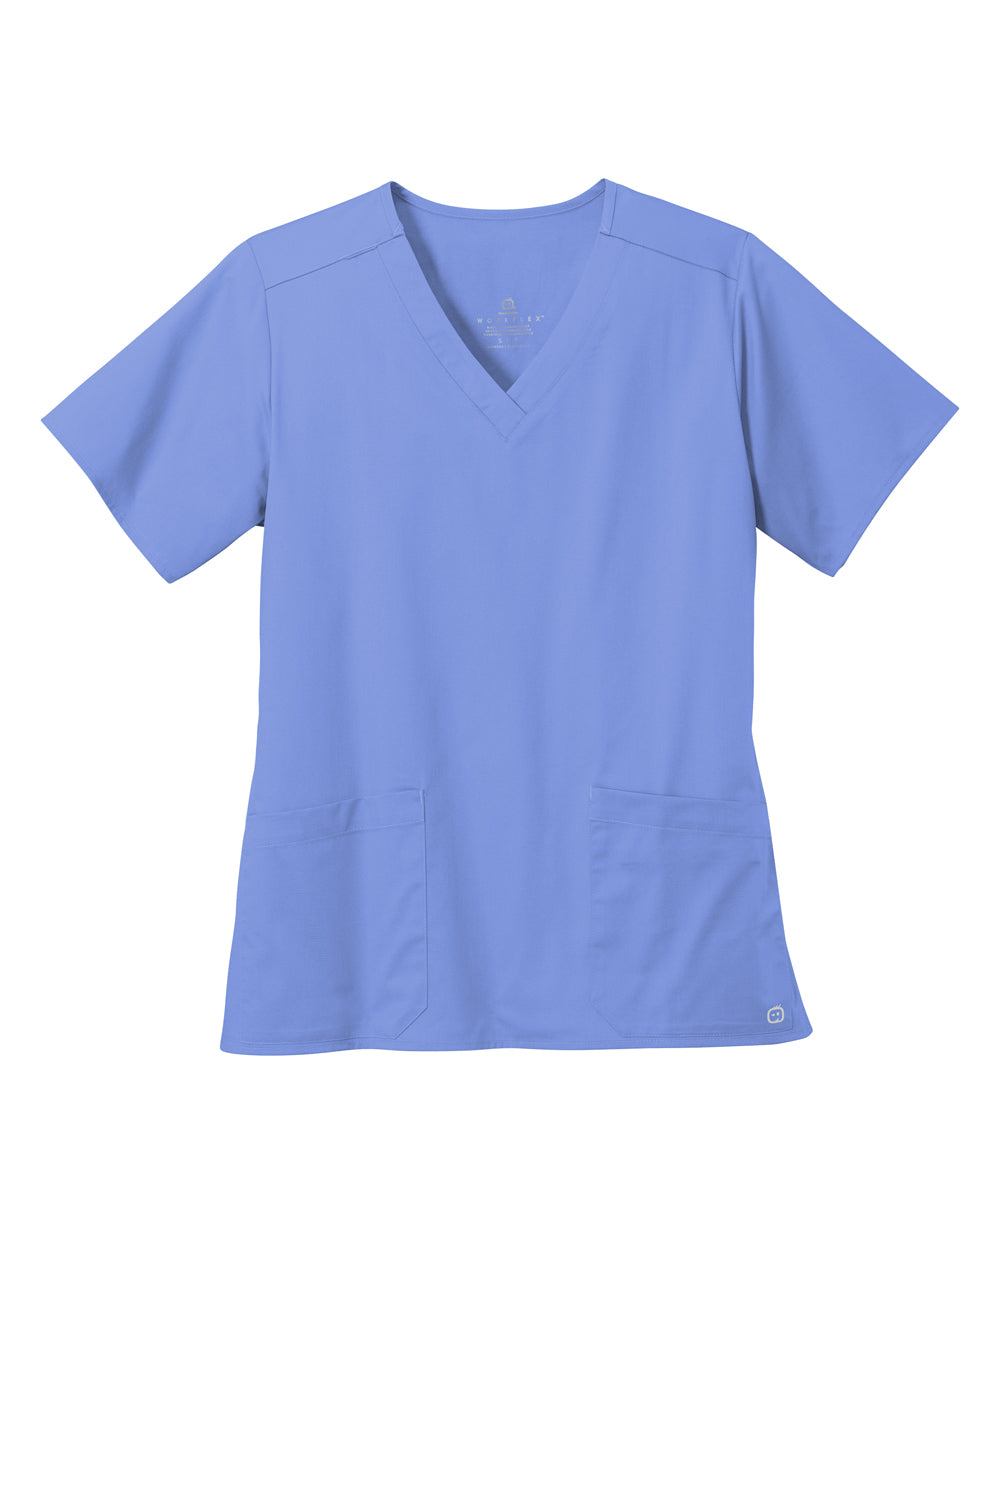 Wonderwink WW4560 WorkFlex Short Sleeve V-Neck Shirt Ceil Blue Flat Front